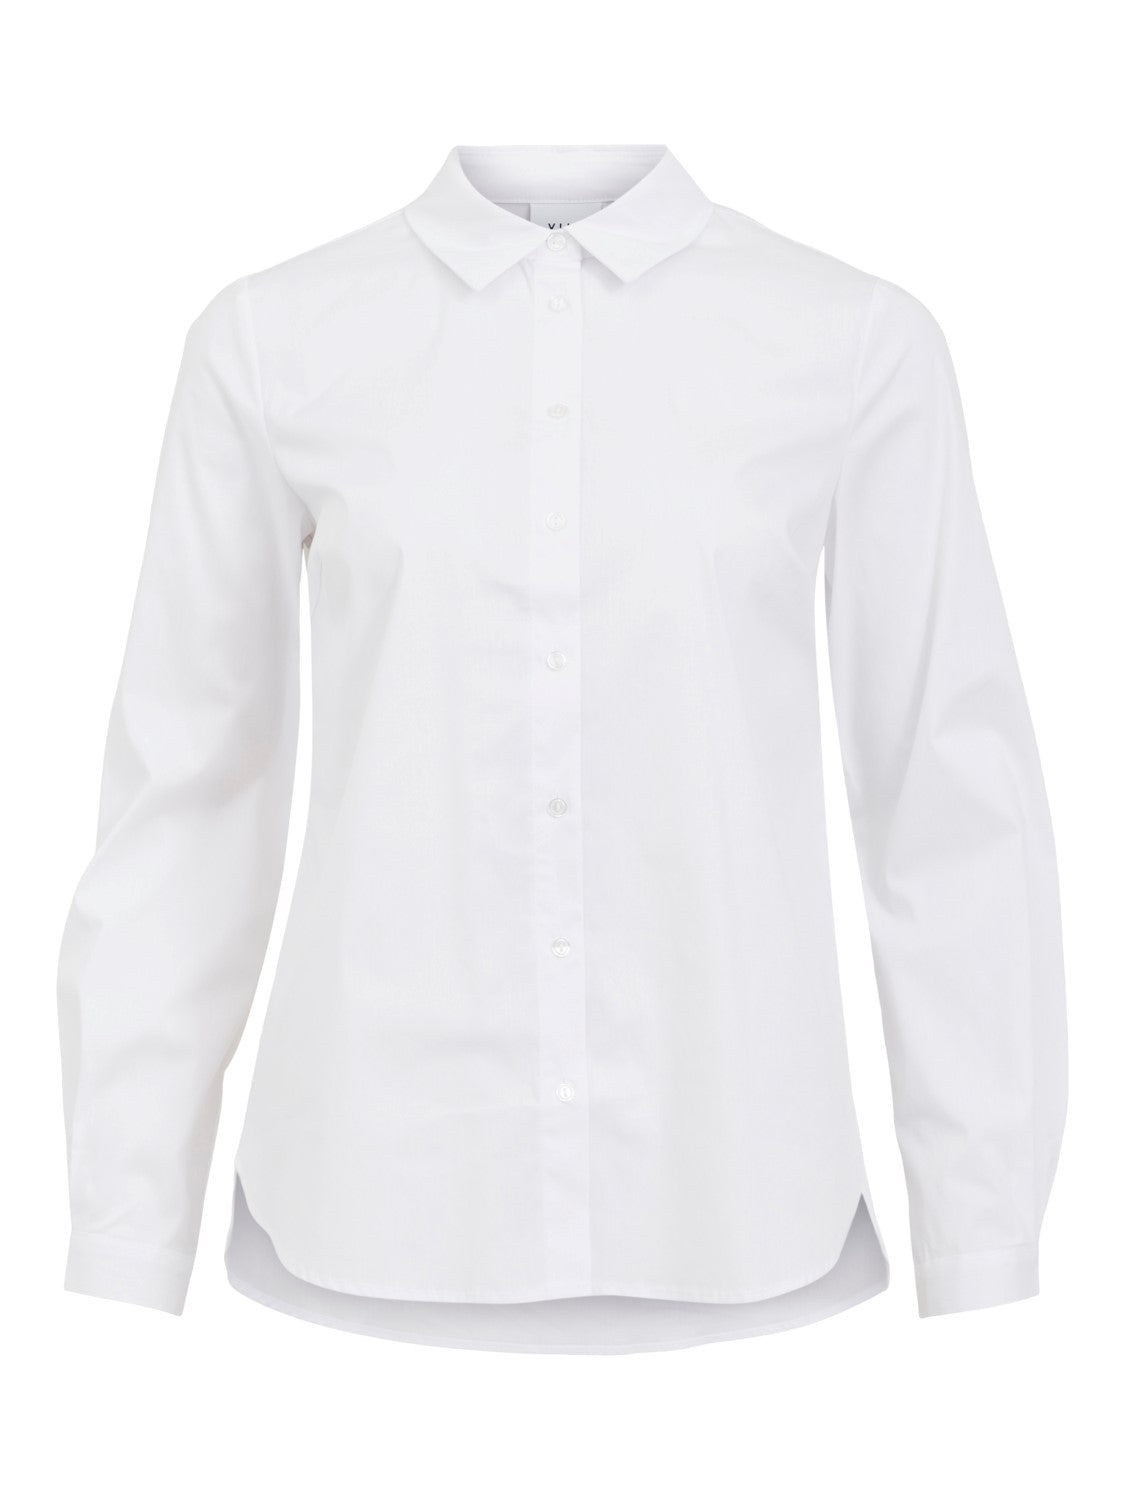 white shirt 